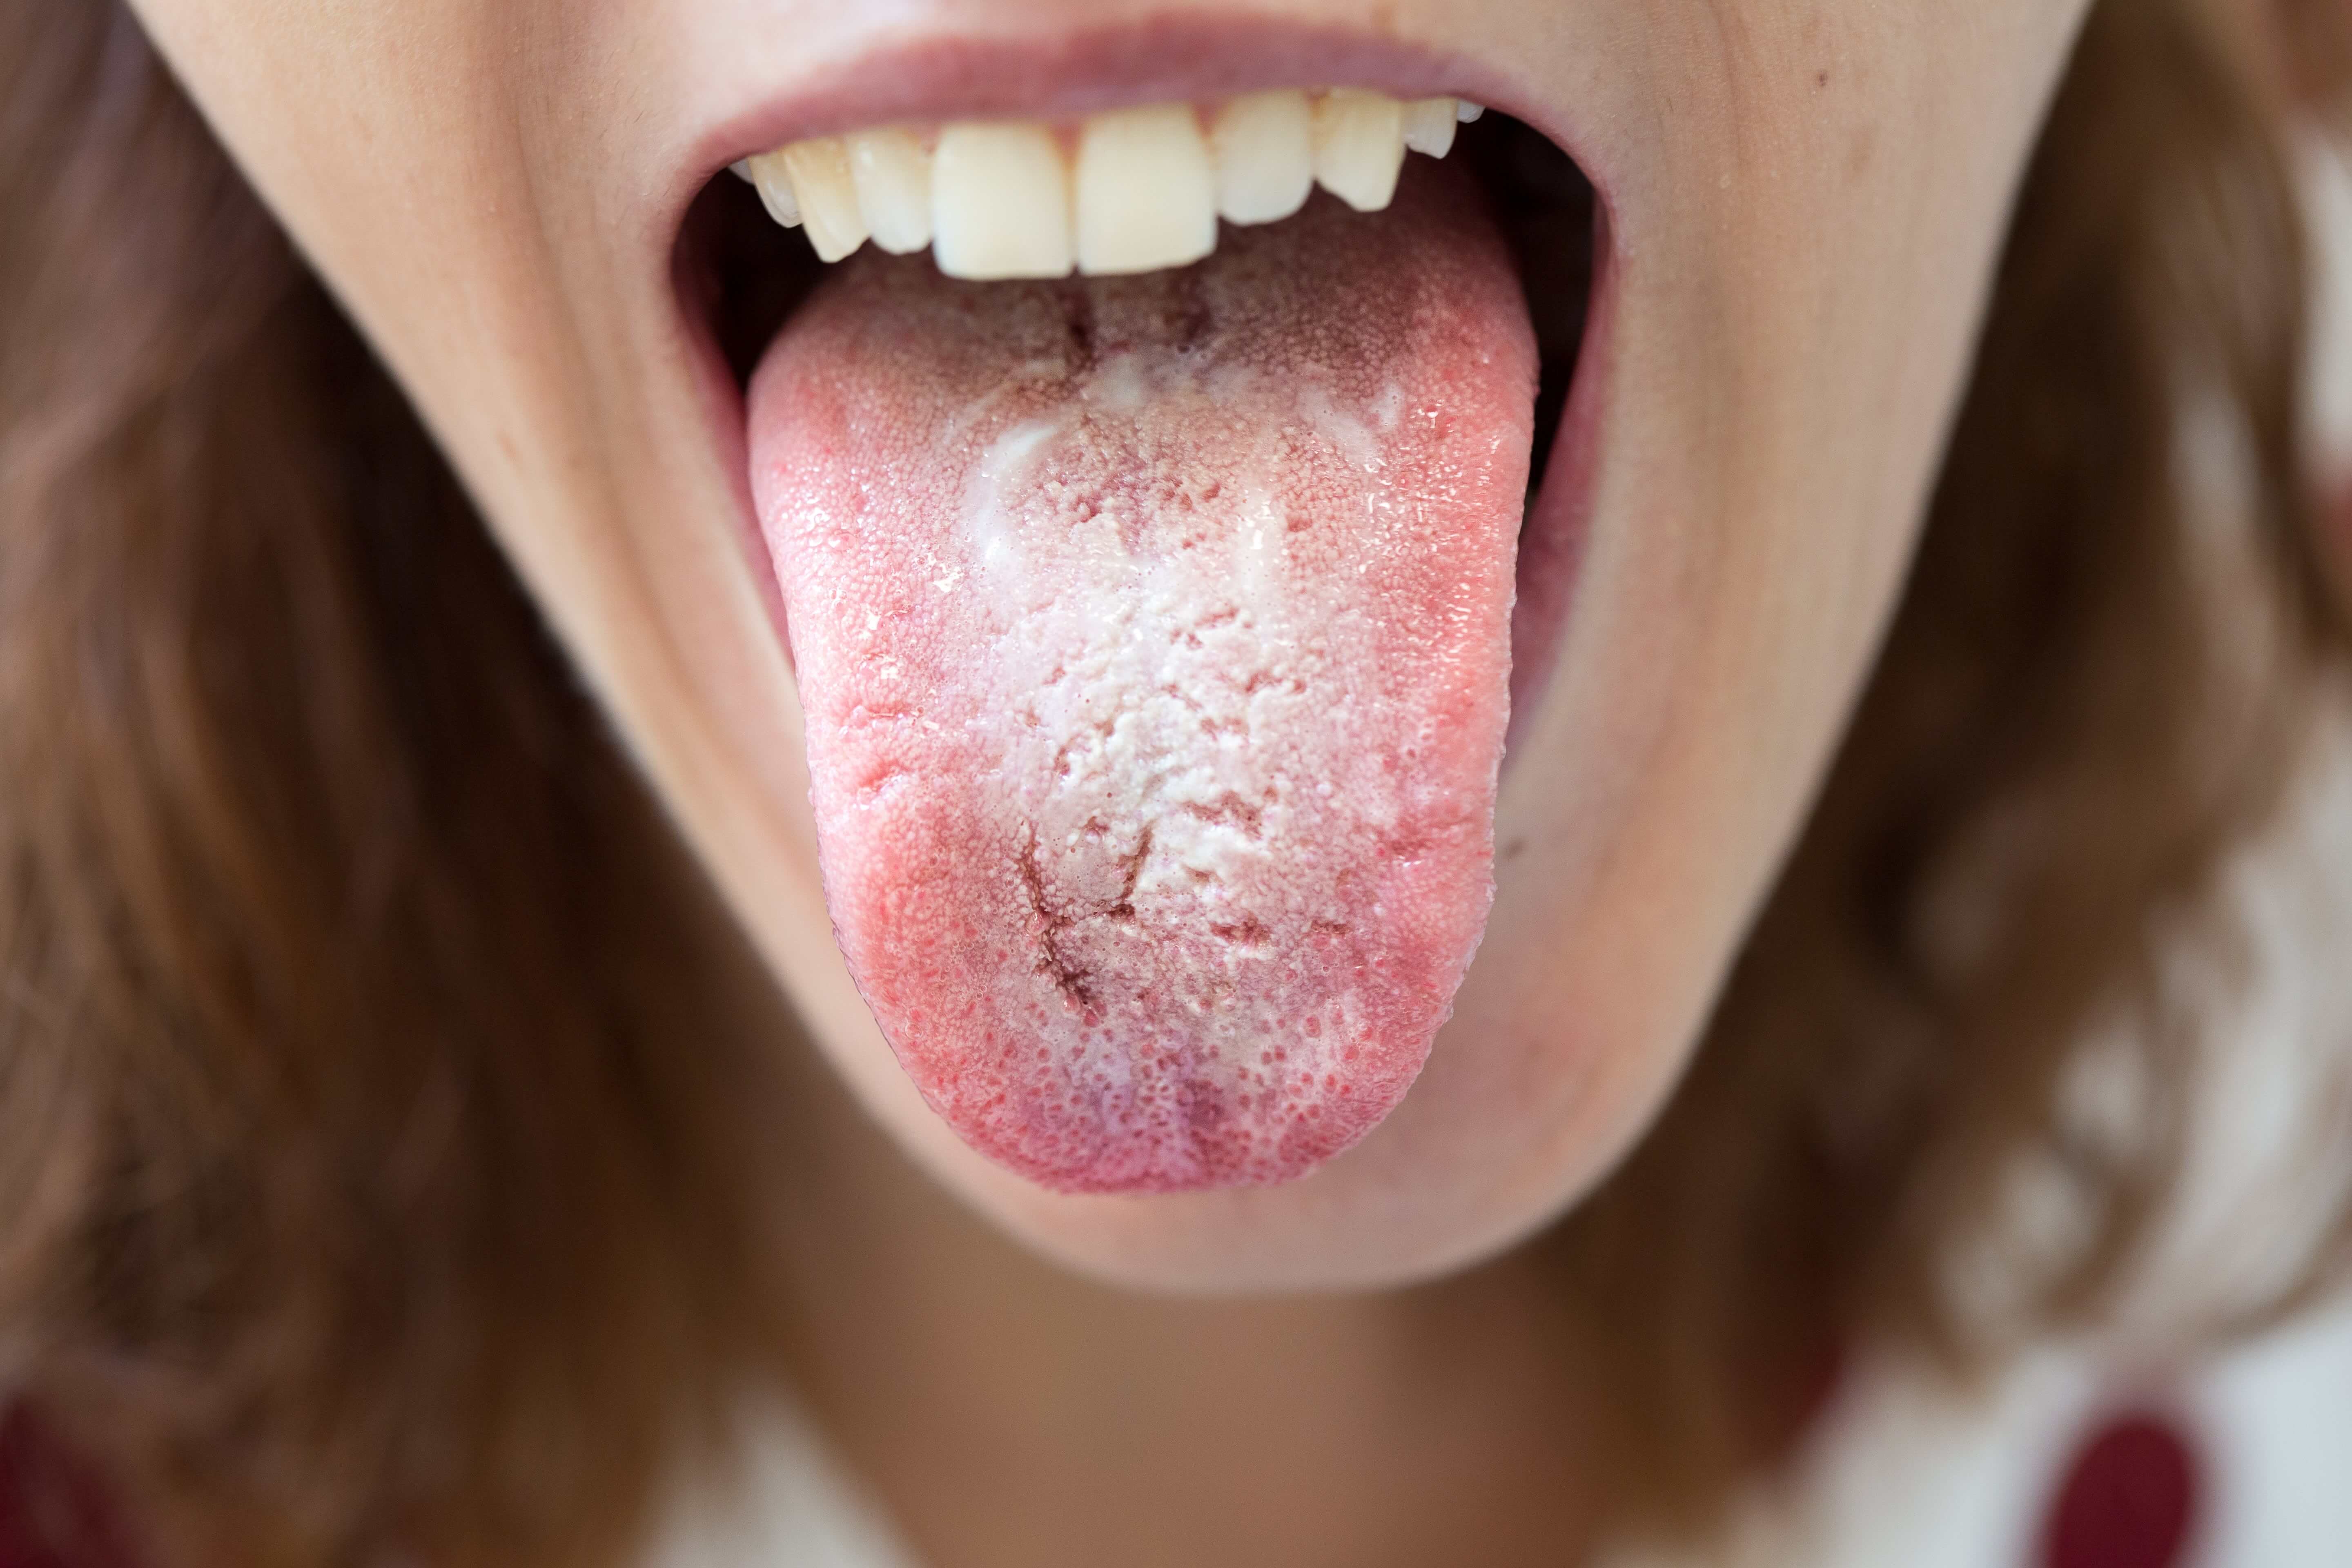 Oral Thrush | Causes, Symptoms, Risk 